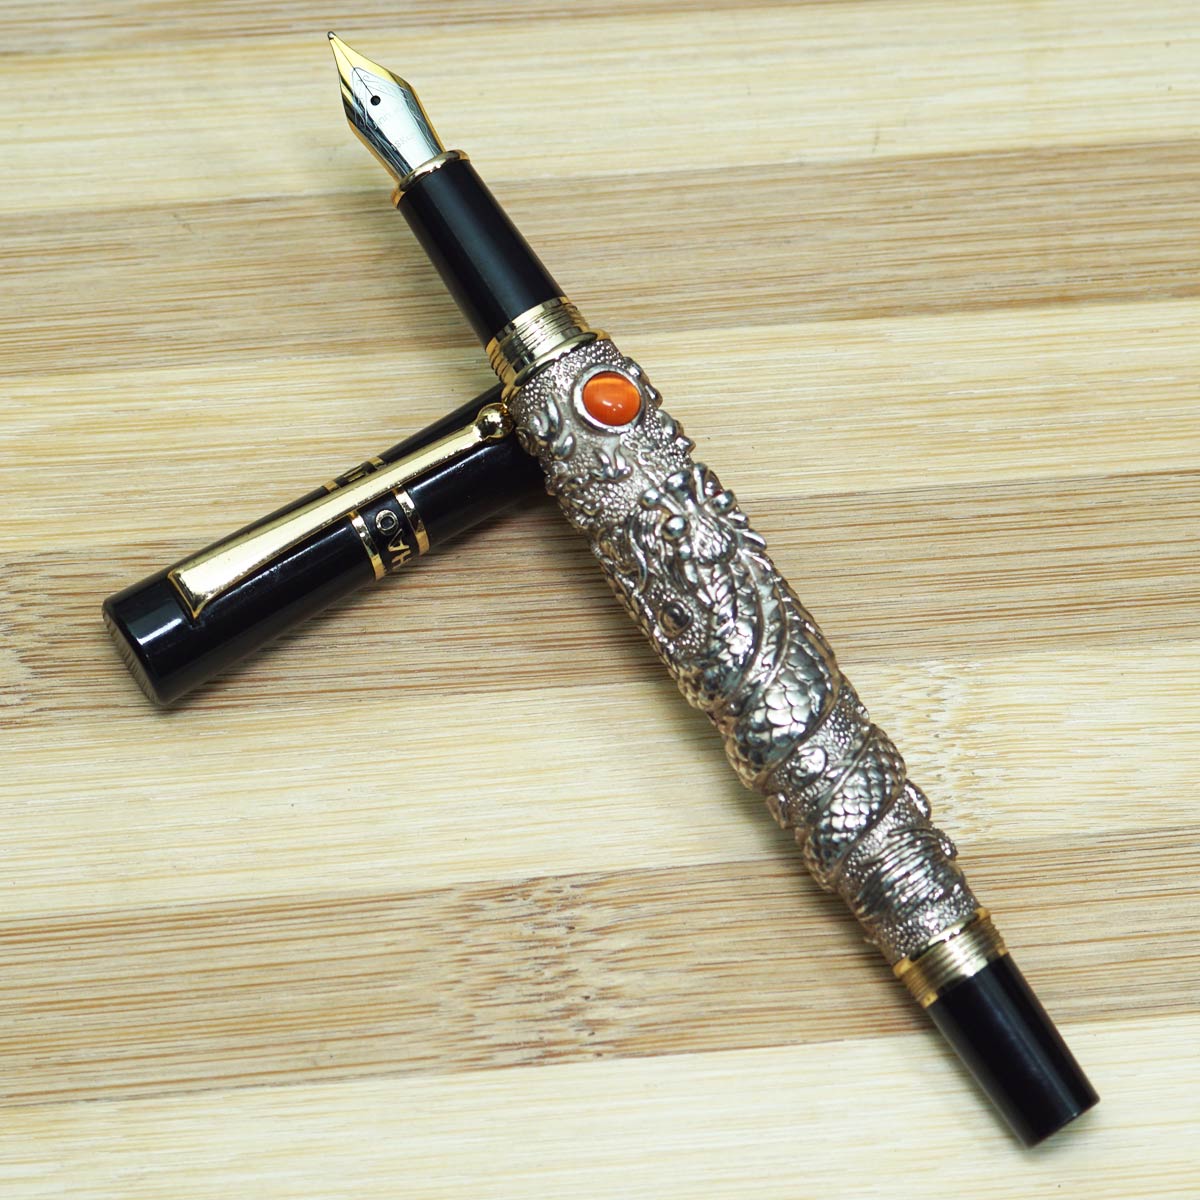 jinhao Dragon Silver Color Body With Black Color Cap and Orange Stone on Body Medium Nib Converter Type Fountain Pen SKU 14263